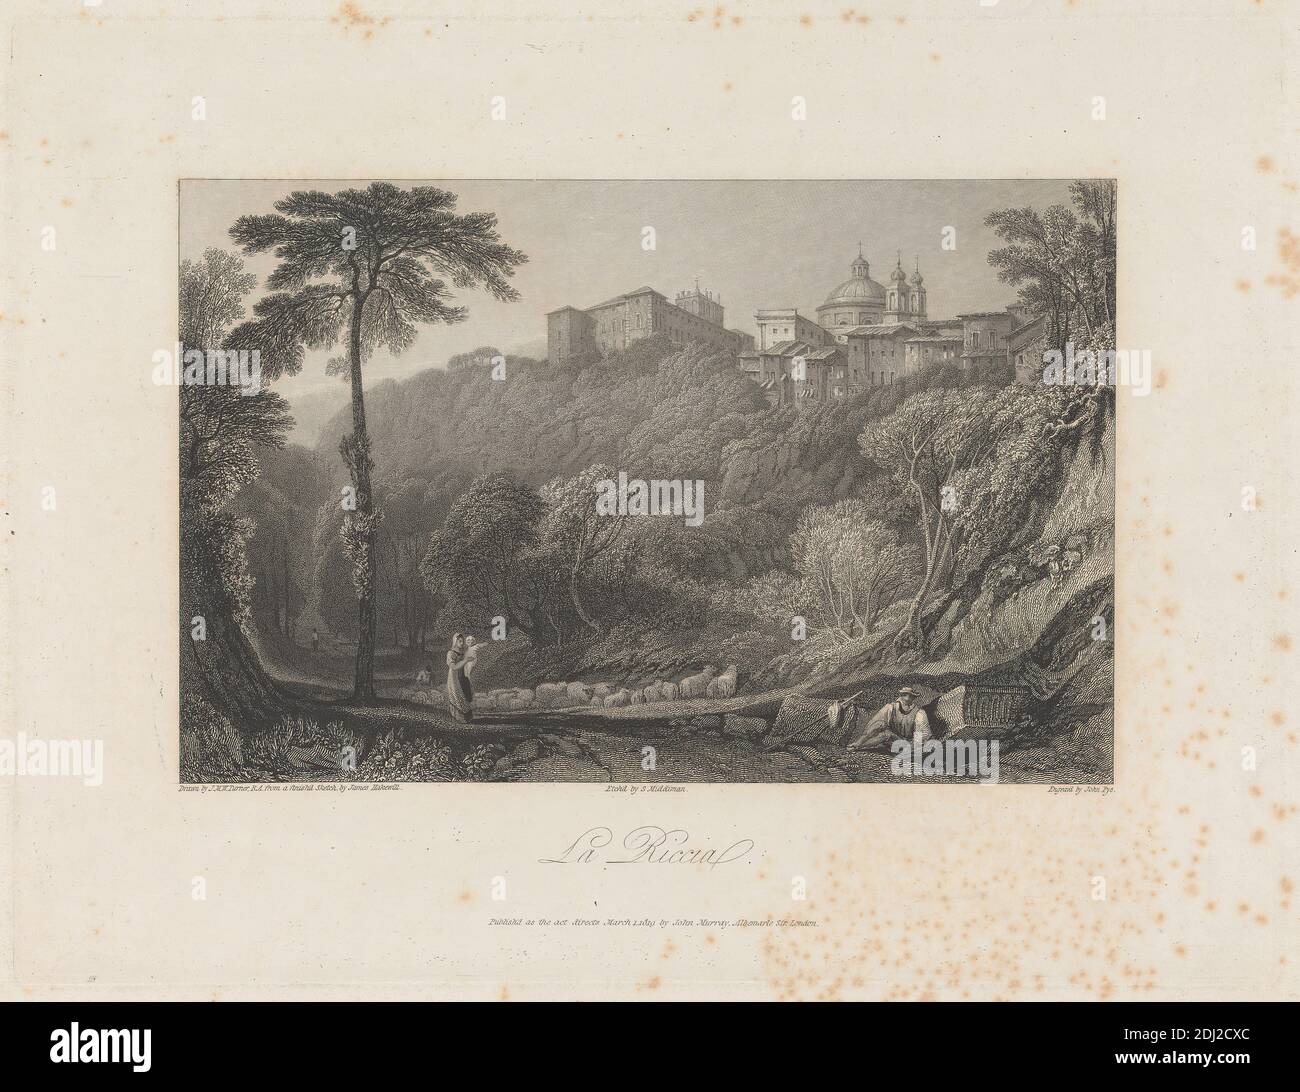 La Riccia, John Pye, 1782–1874, British, Samuel Middiman, ca. 1750–1831, British, after Joseph Mallord William Turner, 1775–1851, British, 1819, Etching and engraving on moderately thick, slightly textured, cream, wove paper, Sheet: 10 1/2 × 14 3/8 inches (26.7 × 36.5 cm), Plate: 9 × 11 7/8 inches (22.9 × 30.2 cm), and Image: 5 5/8 × 8 11/16 inches (14.3 × 22.1 cm Stock Photo